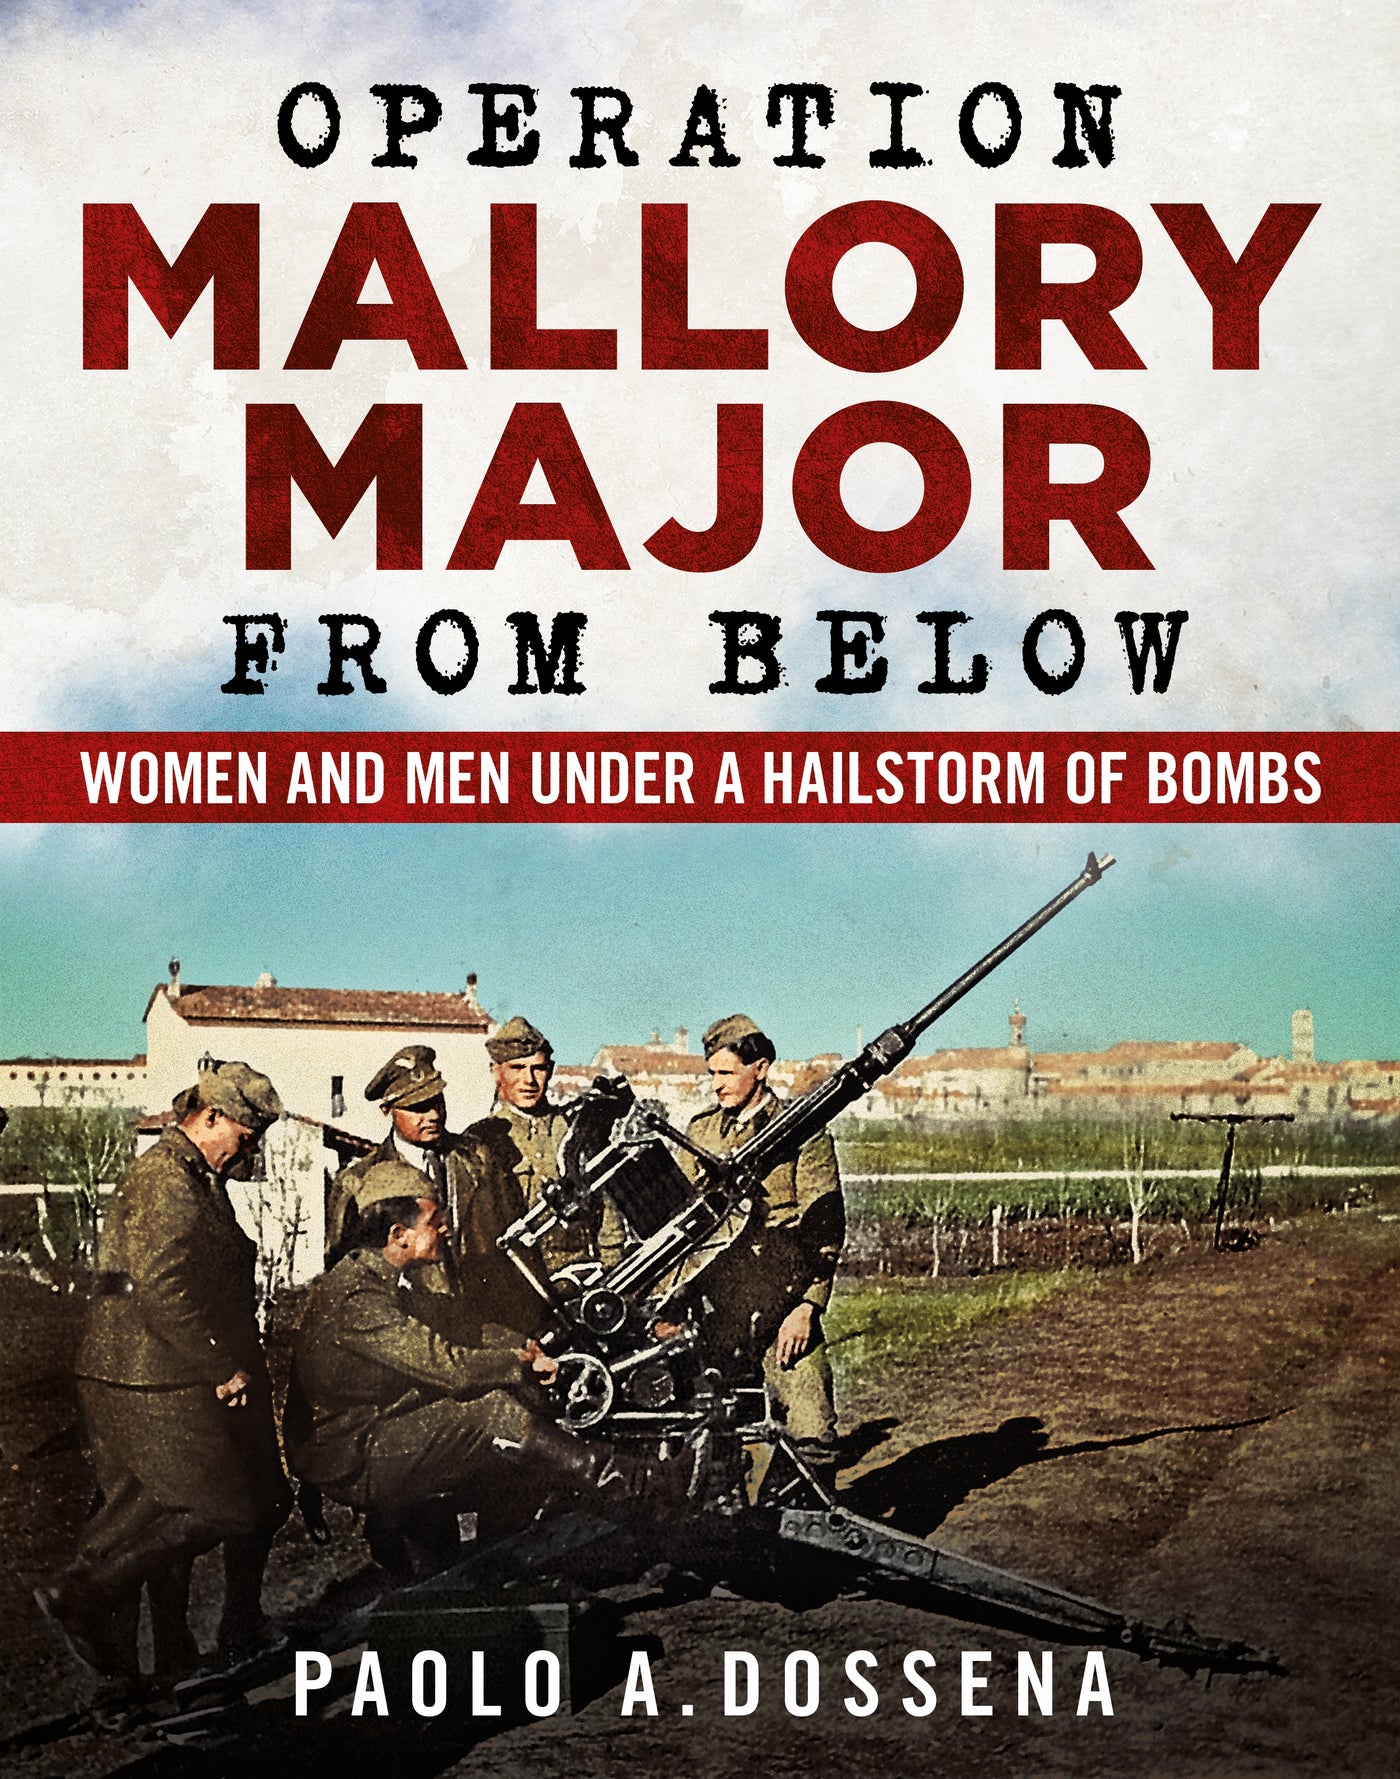 Operation Mallory Major von unten 